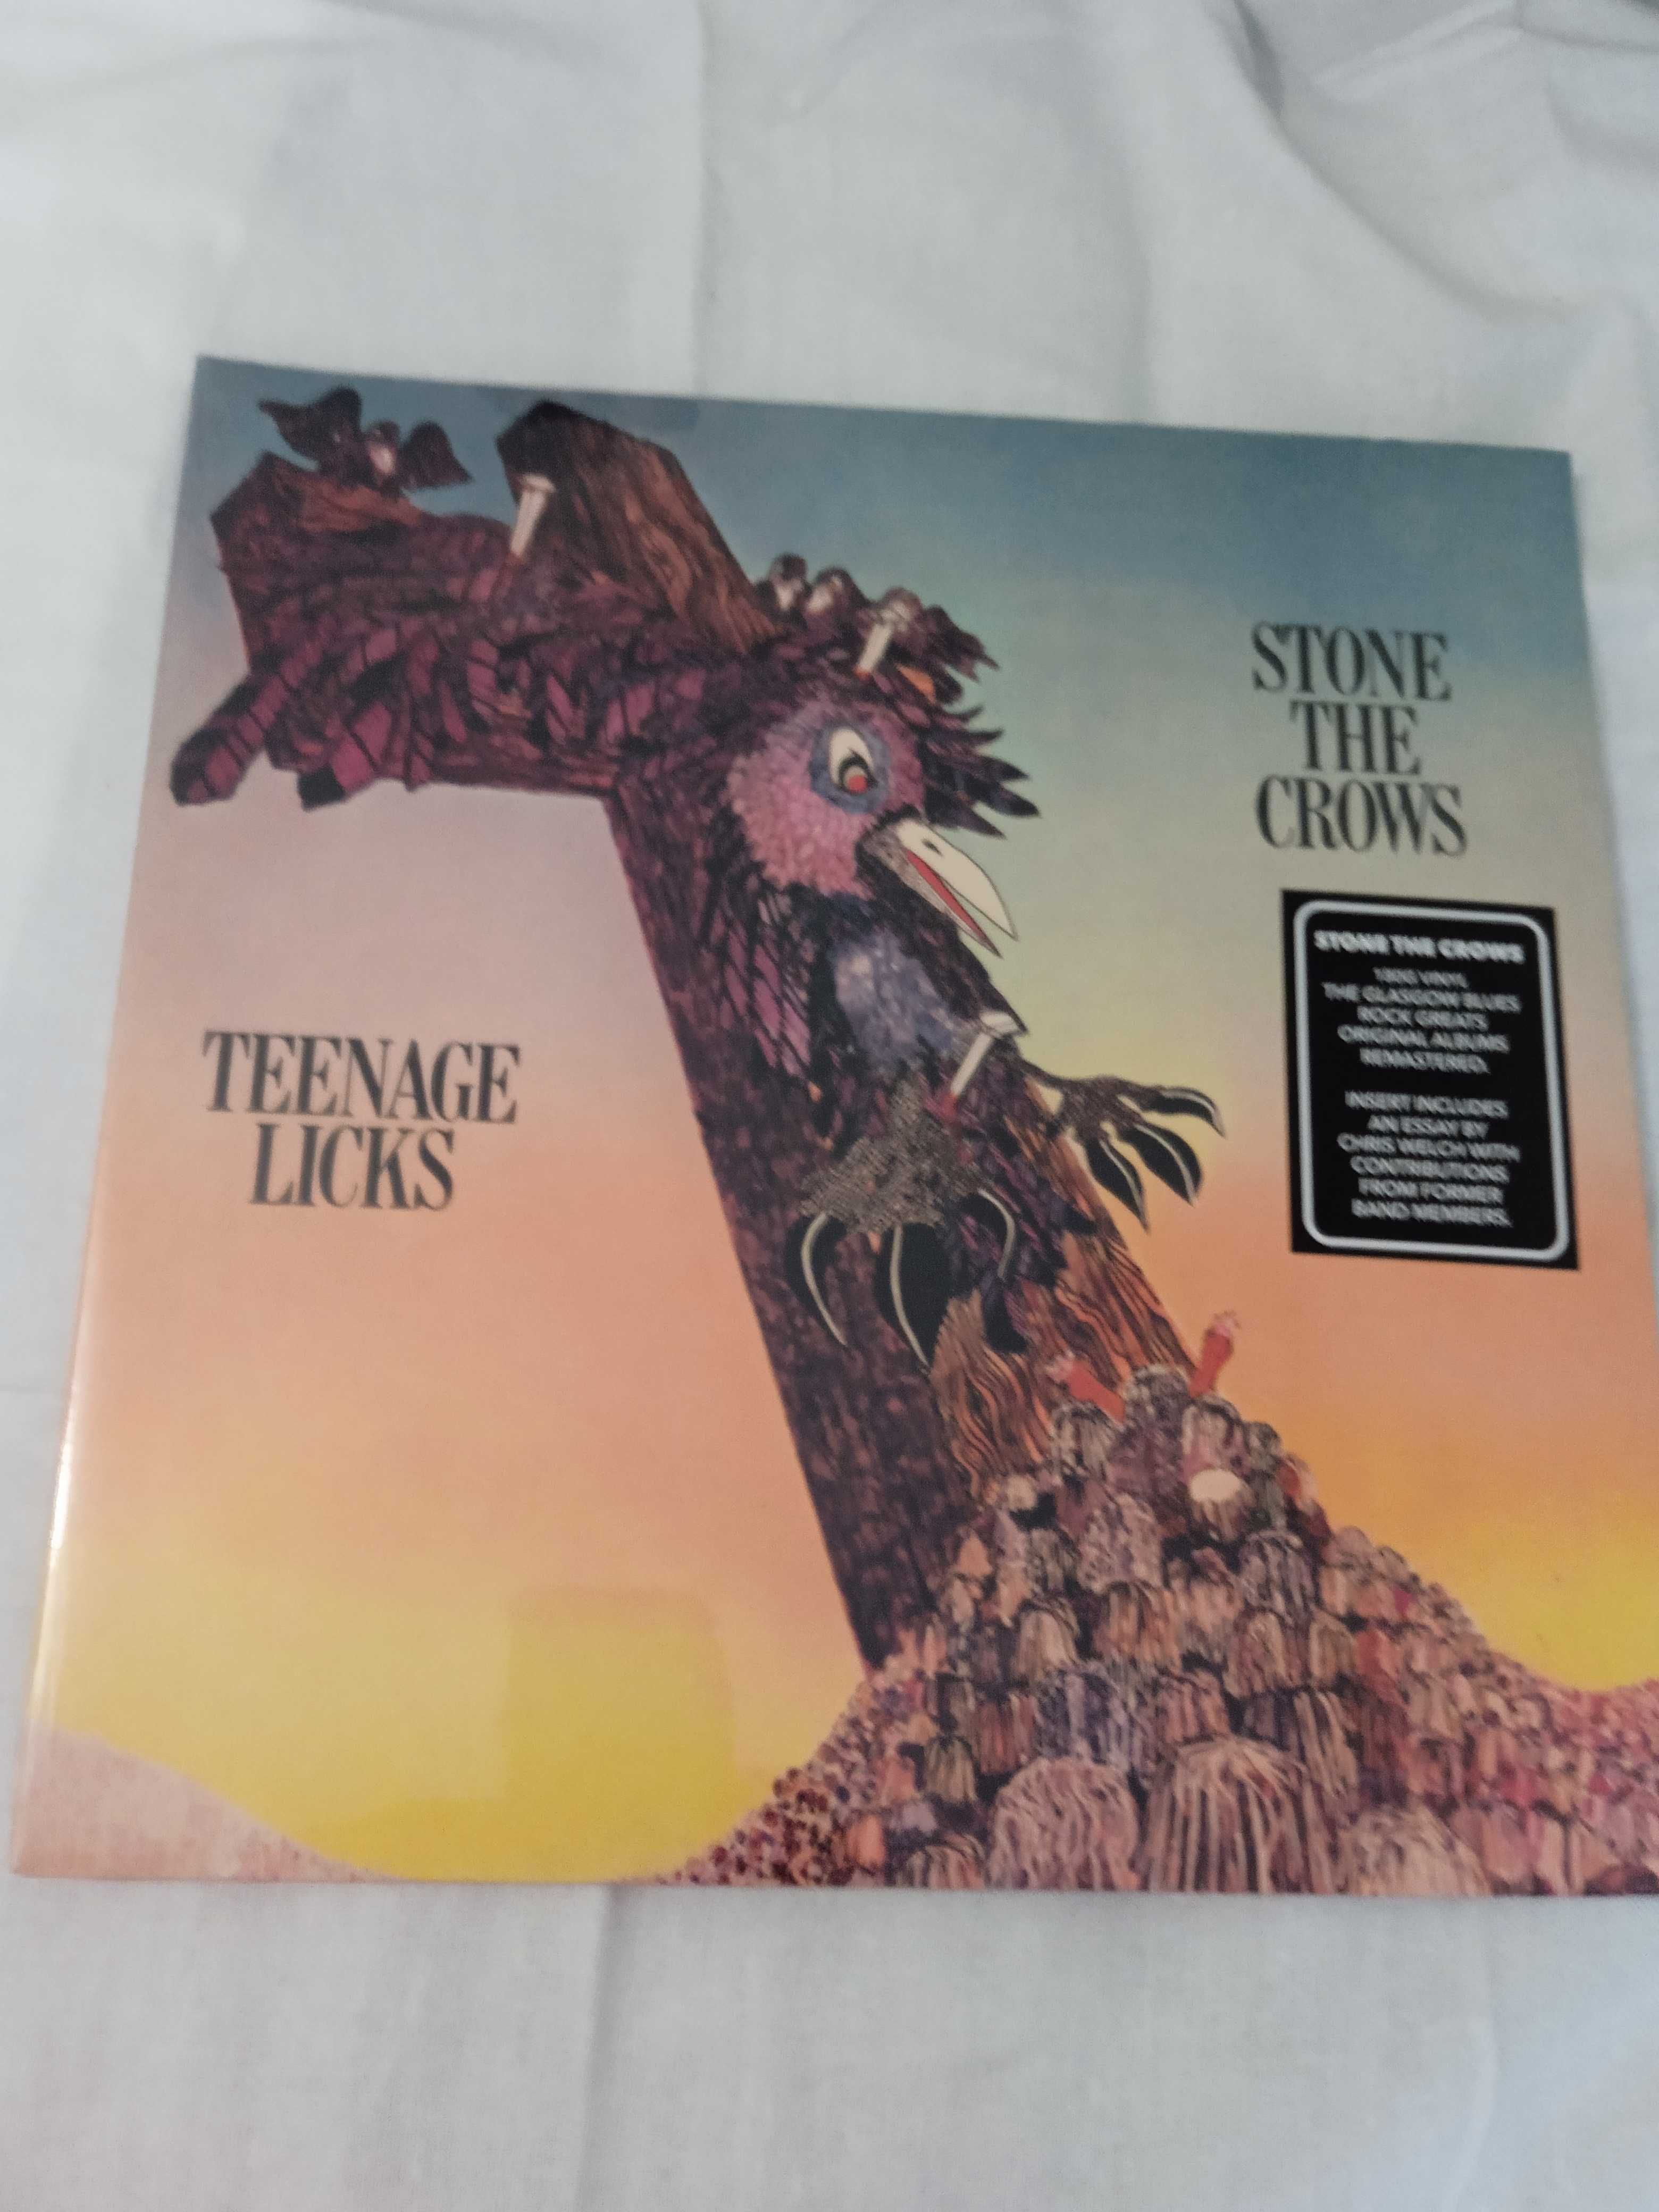 stone the crows / teenage licks / 1971